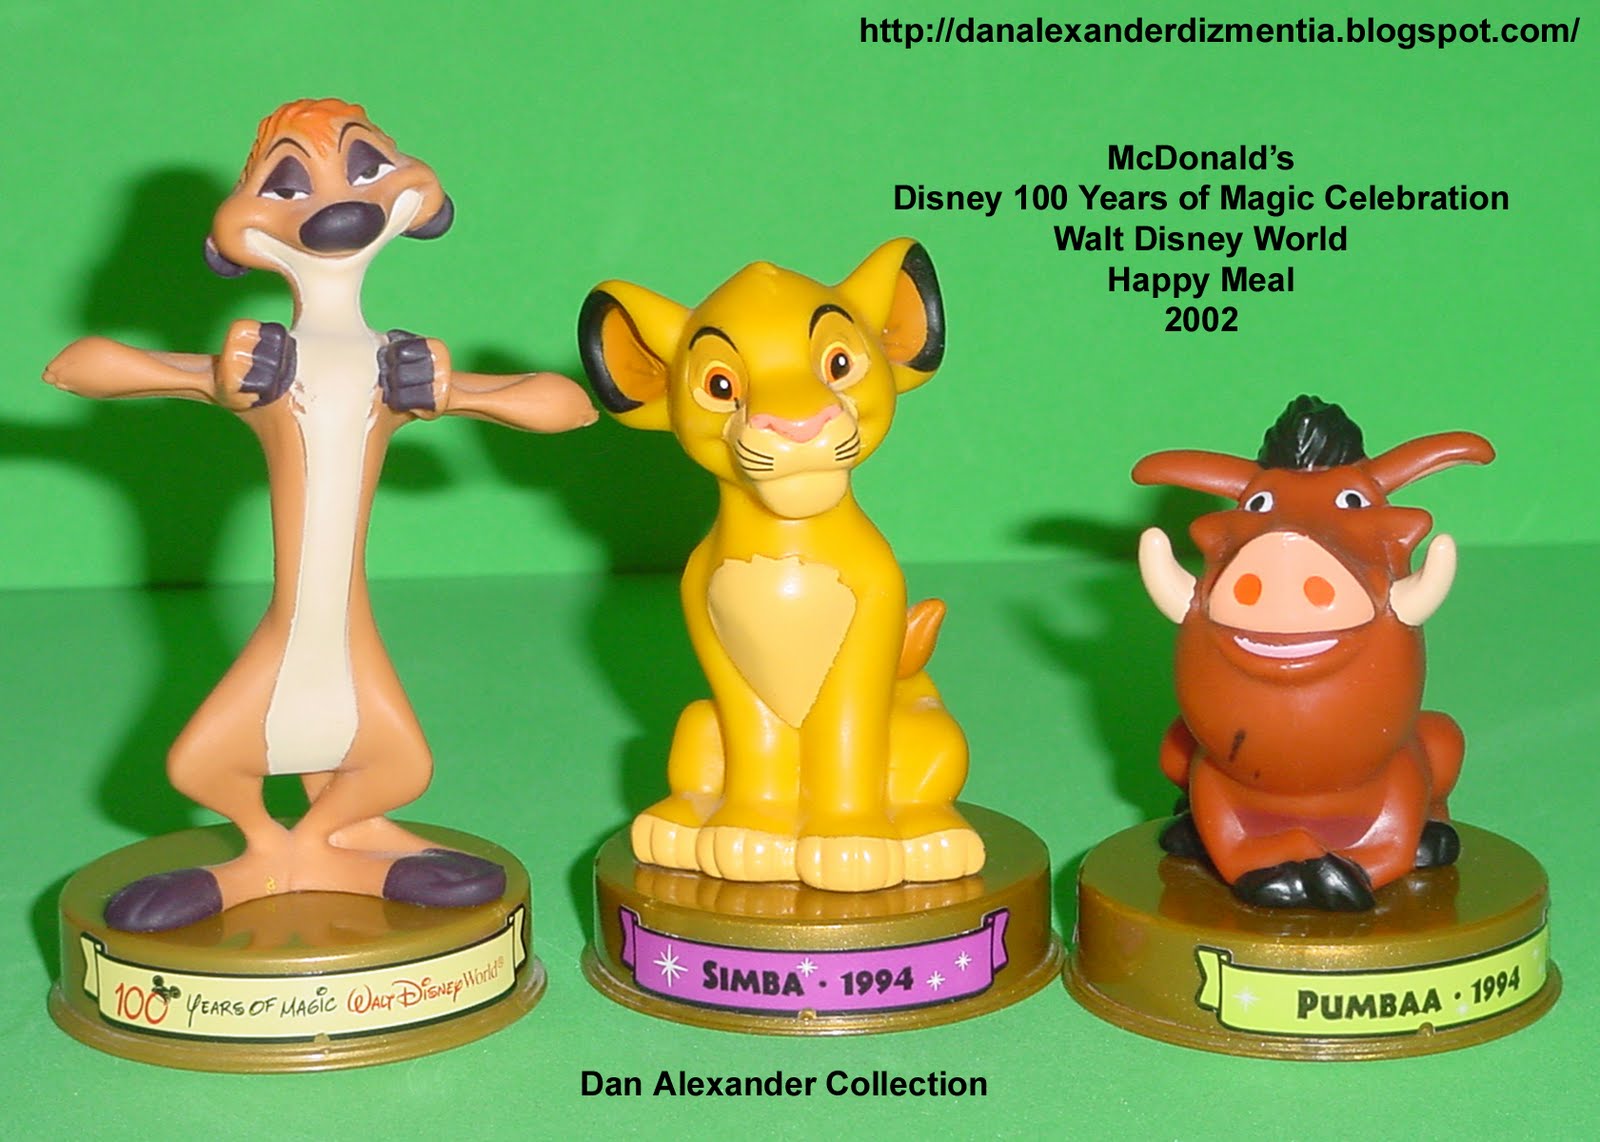 Pumbaa Finger Puppet  McDonald's Kids Meal  2003 The Lion King 1 1/2 Details about   Disney 